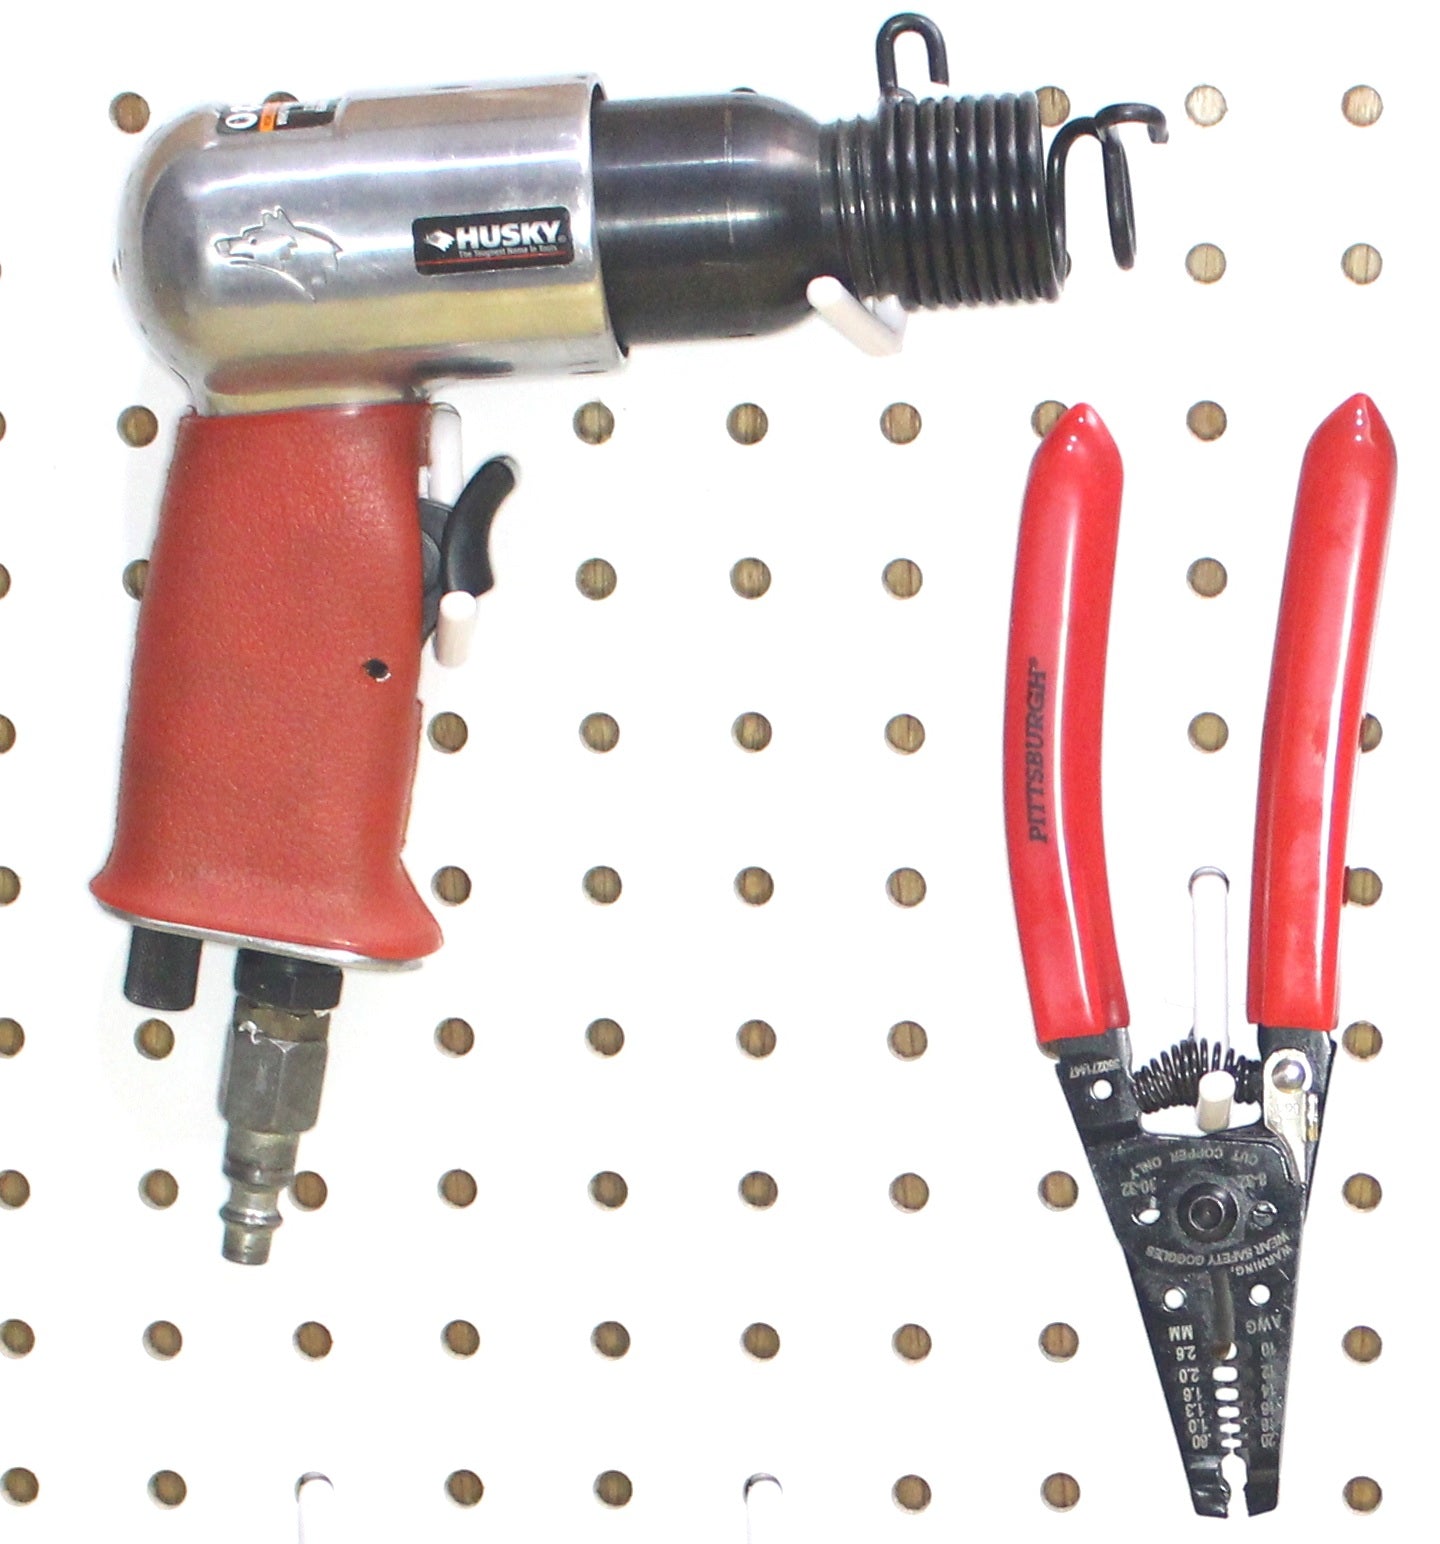 J & L Style Plastic White Pegboard Locking Hooks Kits - Multi-Packs | Garage storage jewelry tools crafts